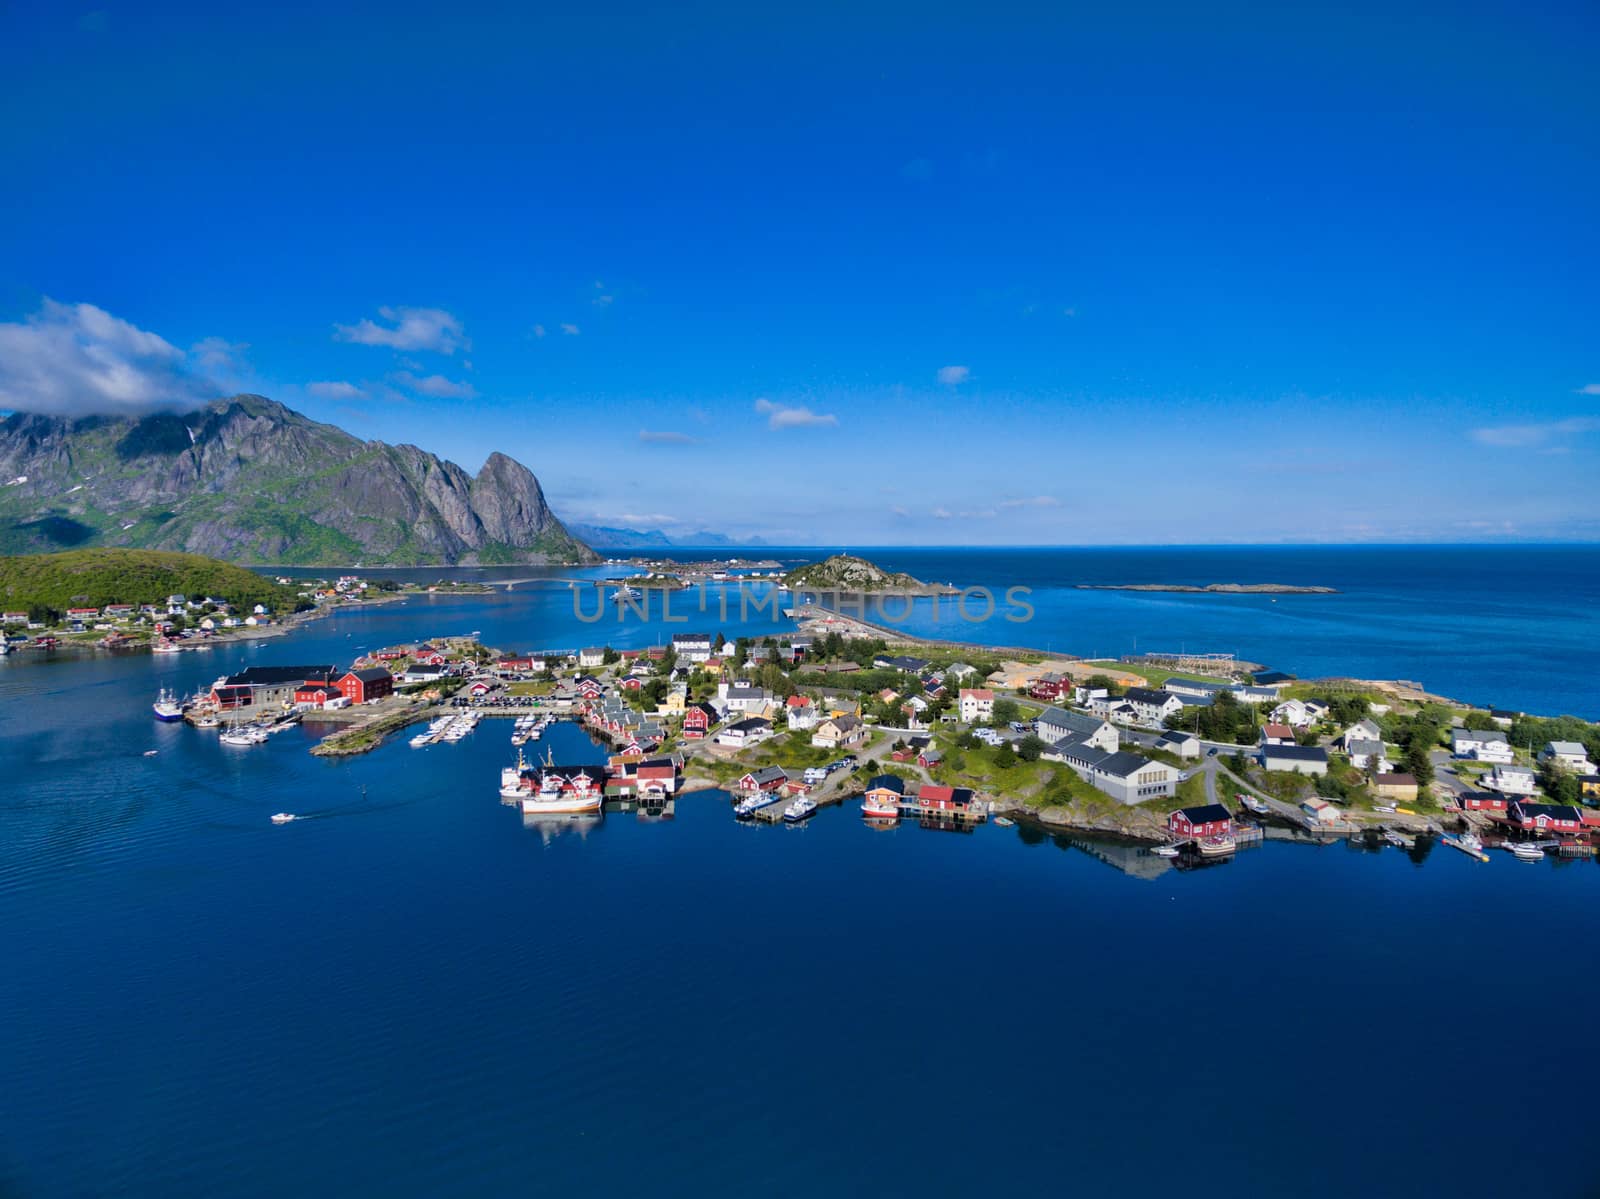 Picturesque town Reine on Lofoten islands in Norway, scenic aerial view